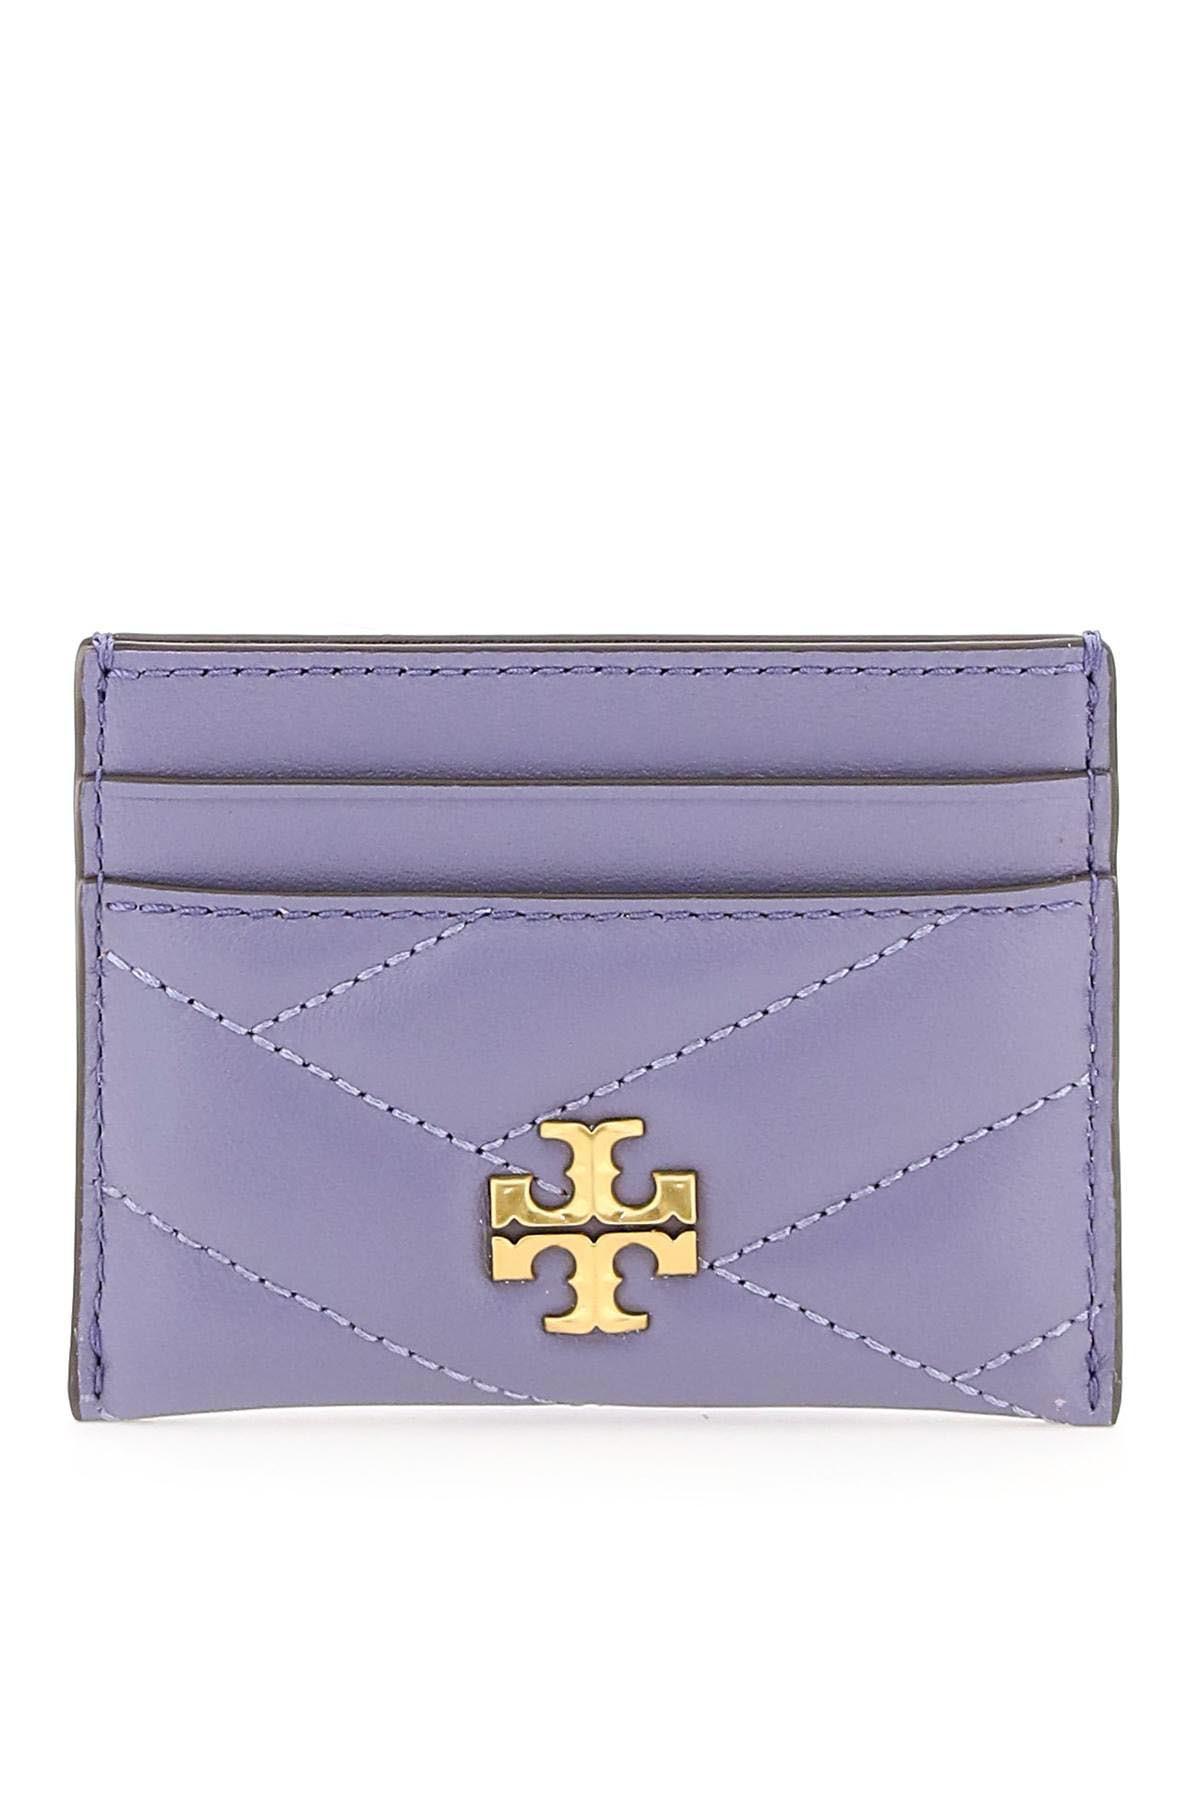 Tory Burch Leather Kira Chevron Cardholder in Purple - Save 24% | Lyst